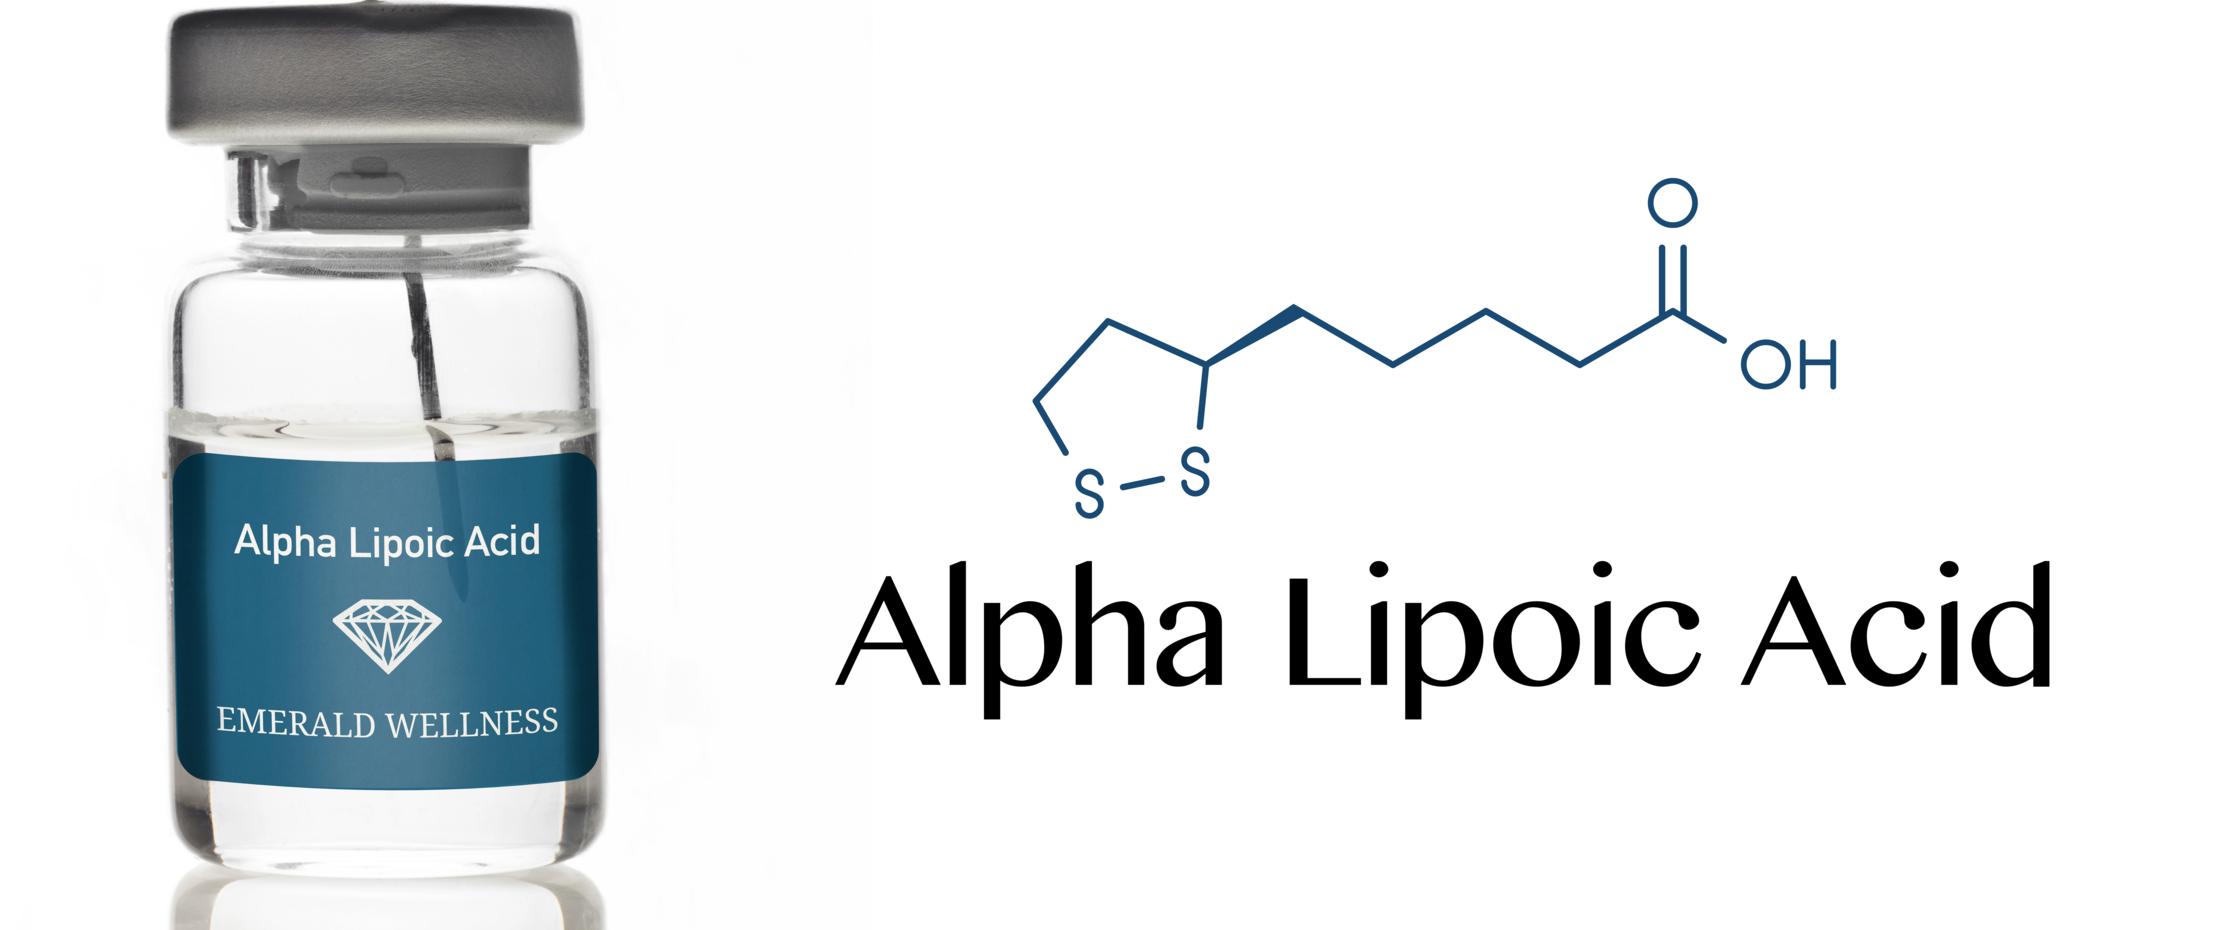 IV Alpha Lipoic Aci (ALA) Therapy & The Benefits!